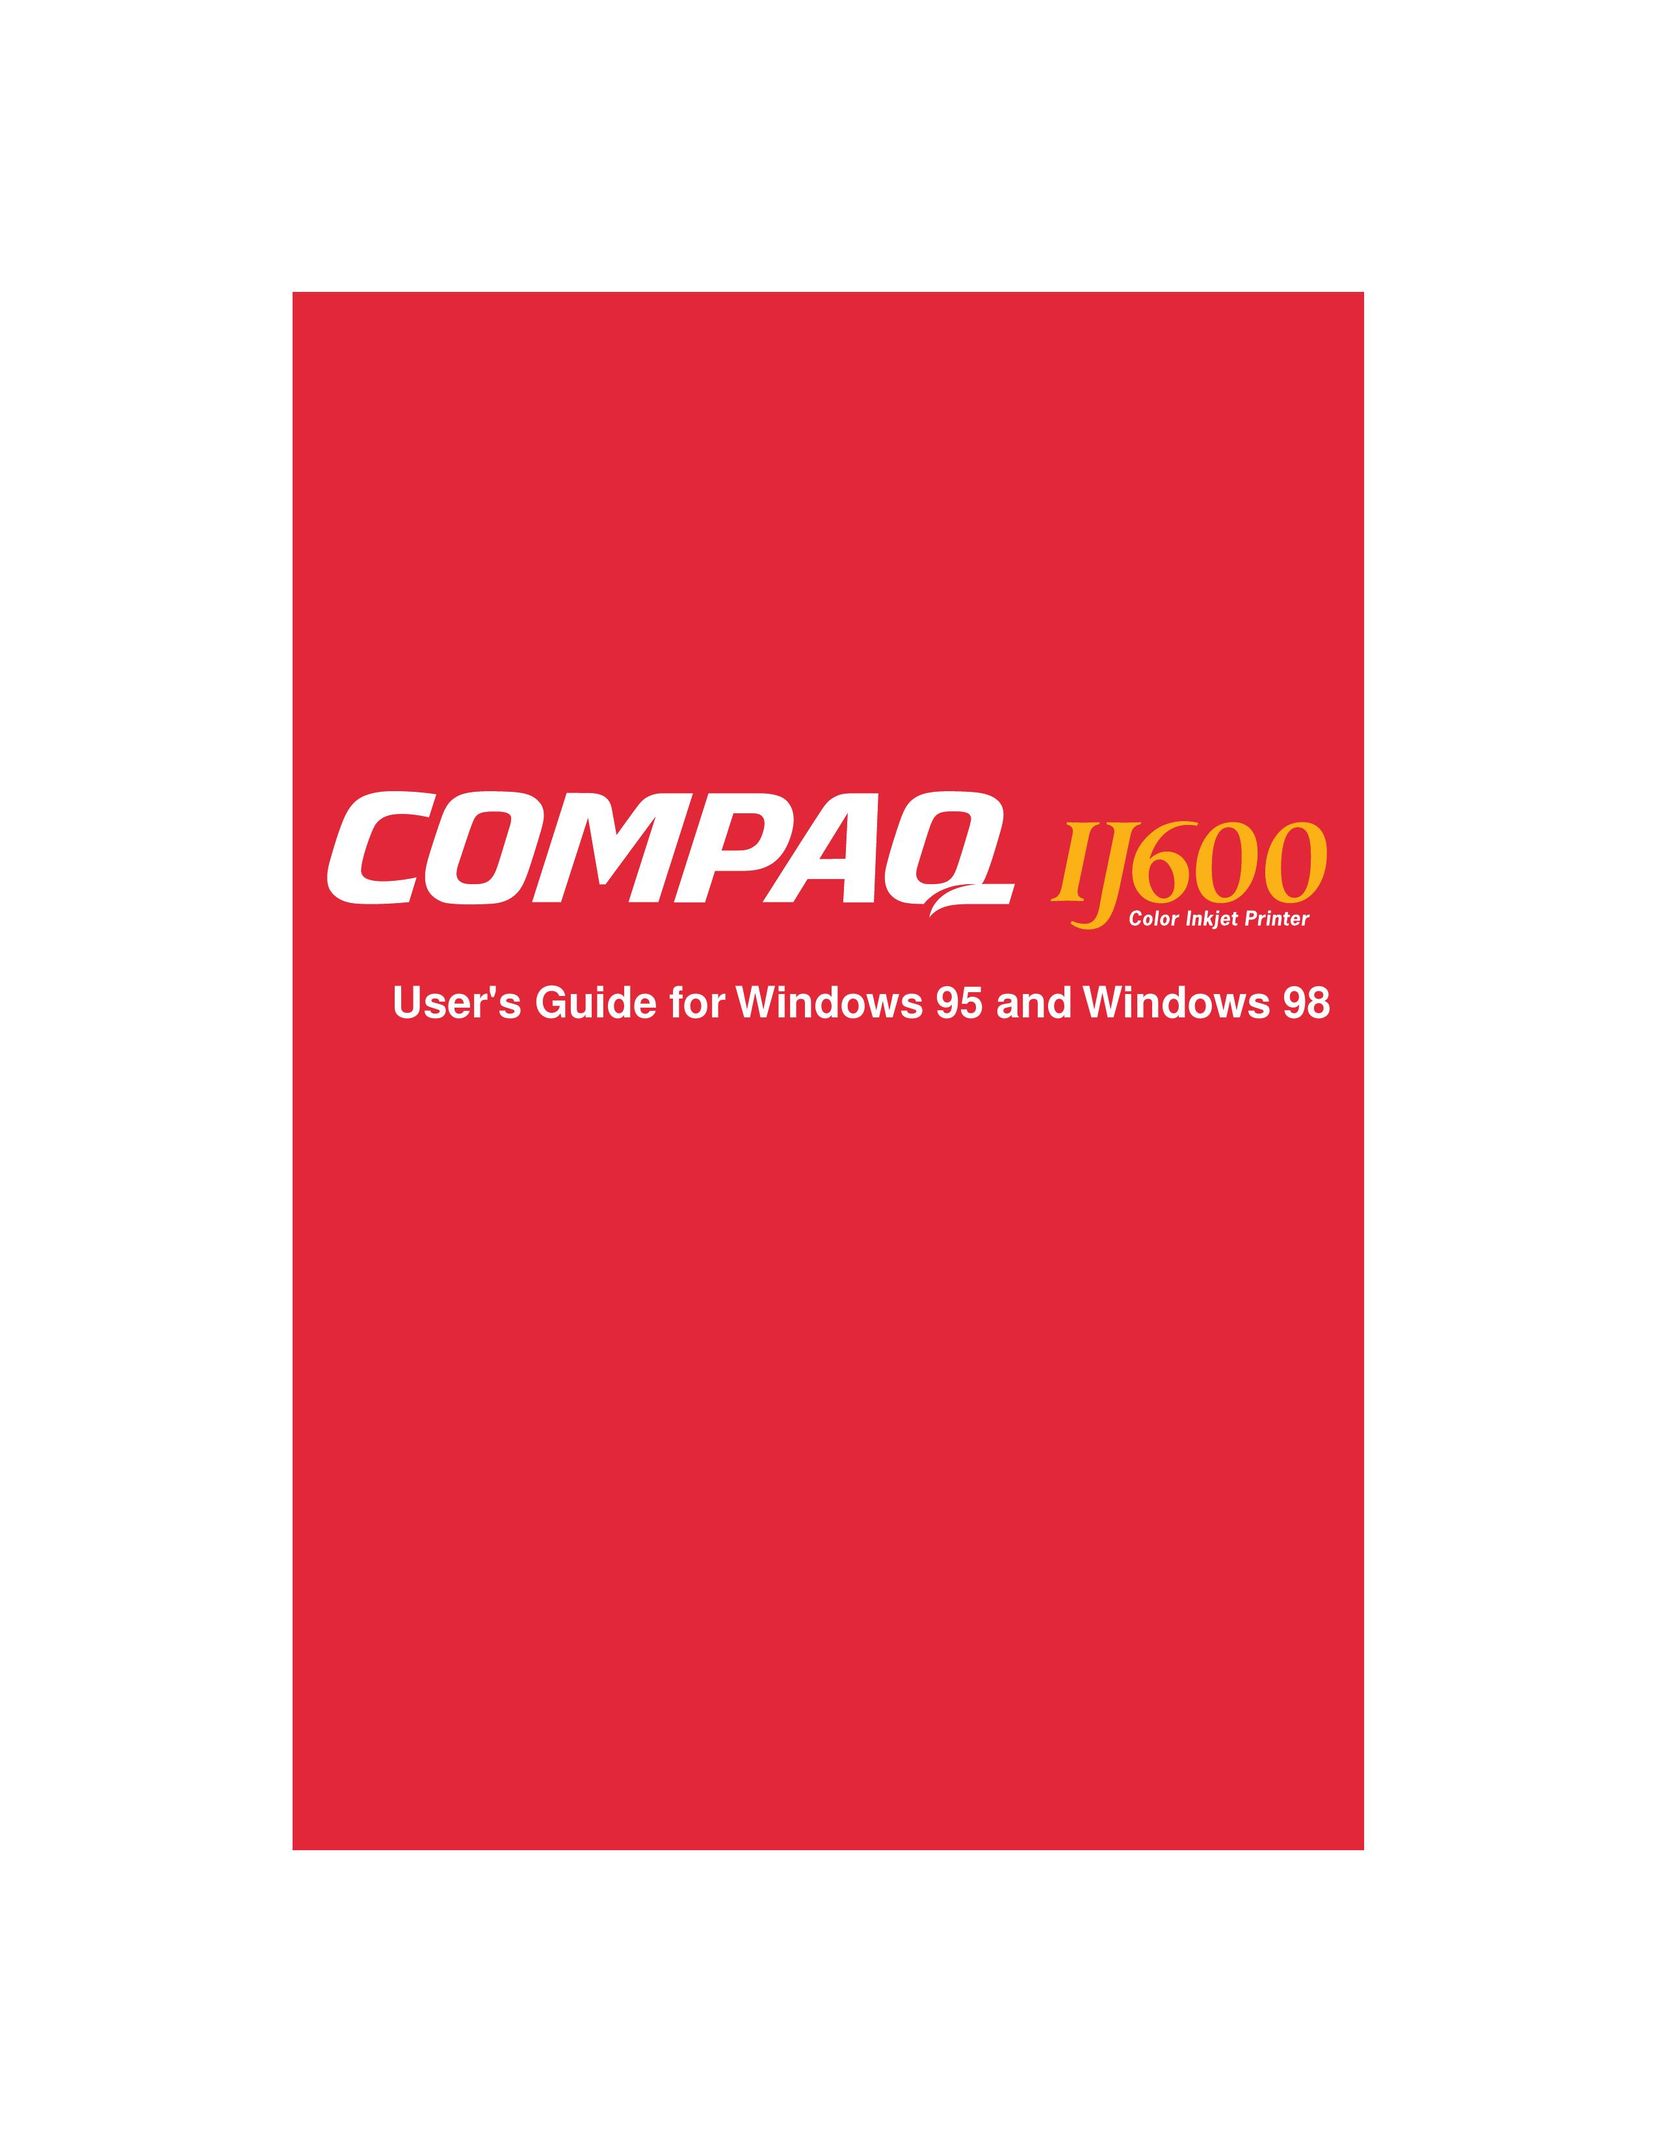 Compaq IJ600 Printer User Manual